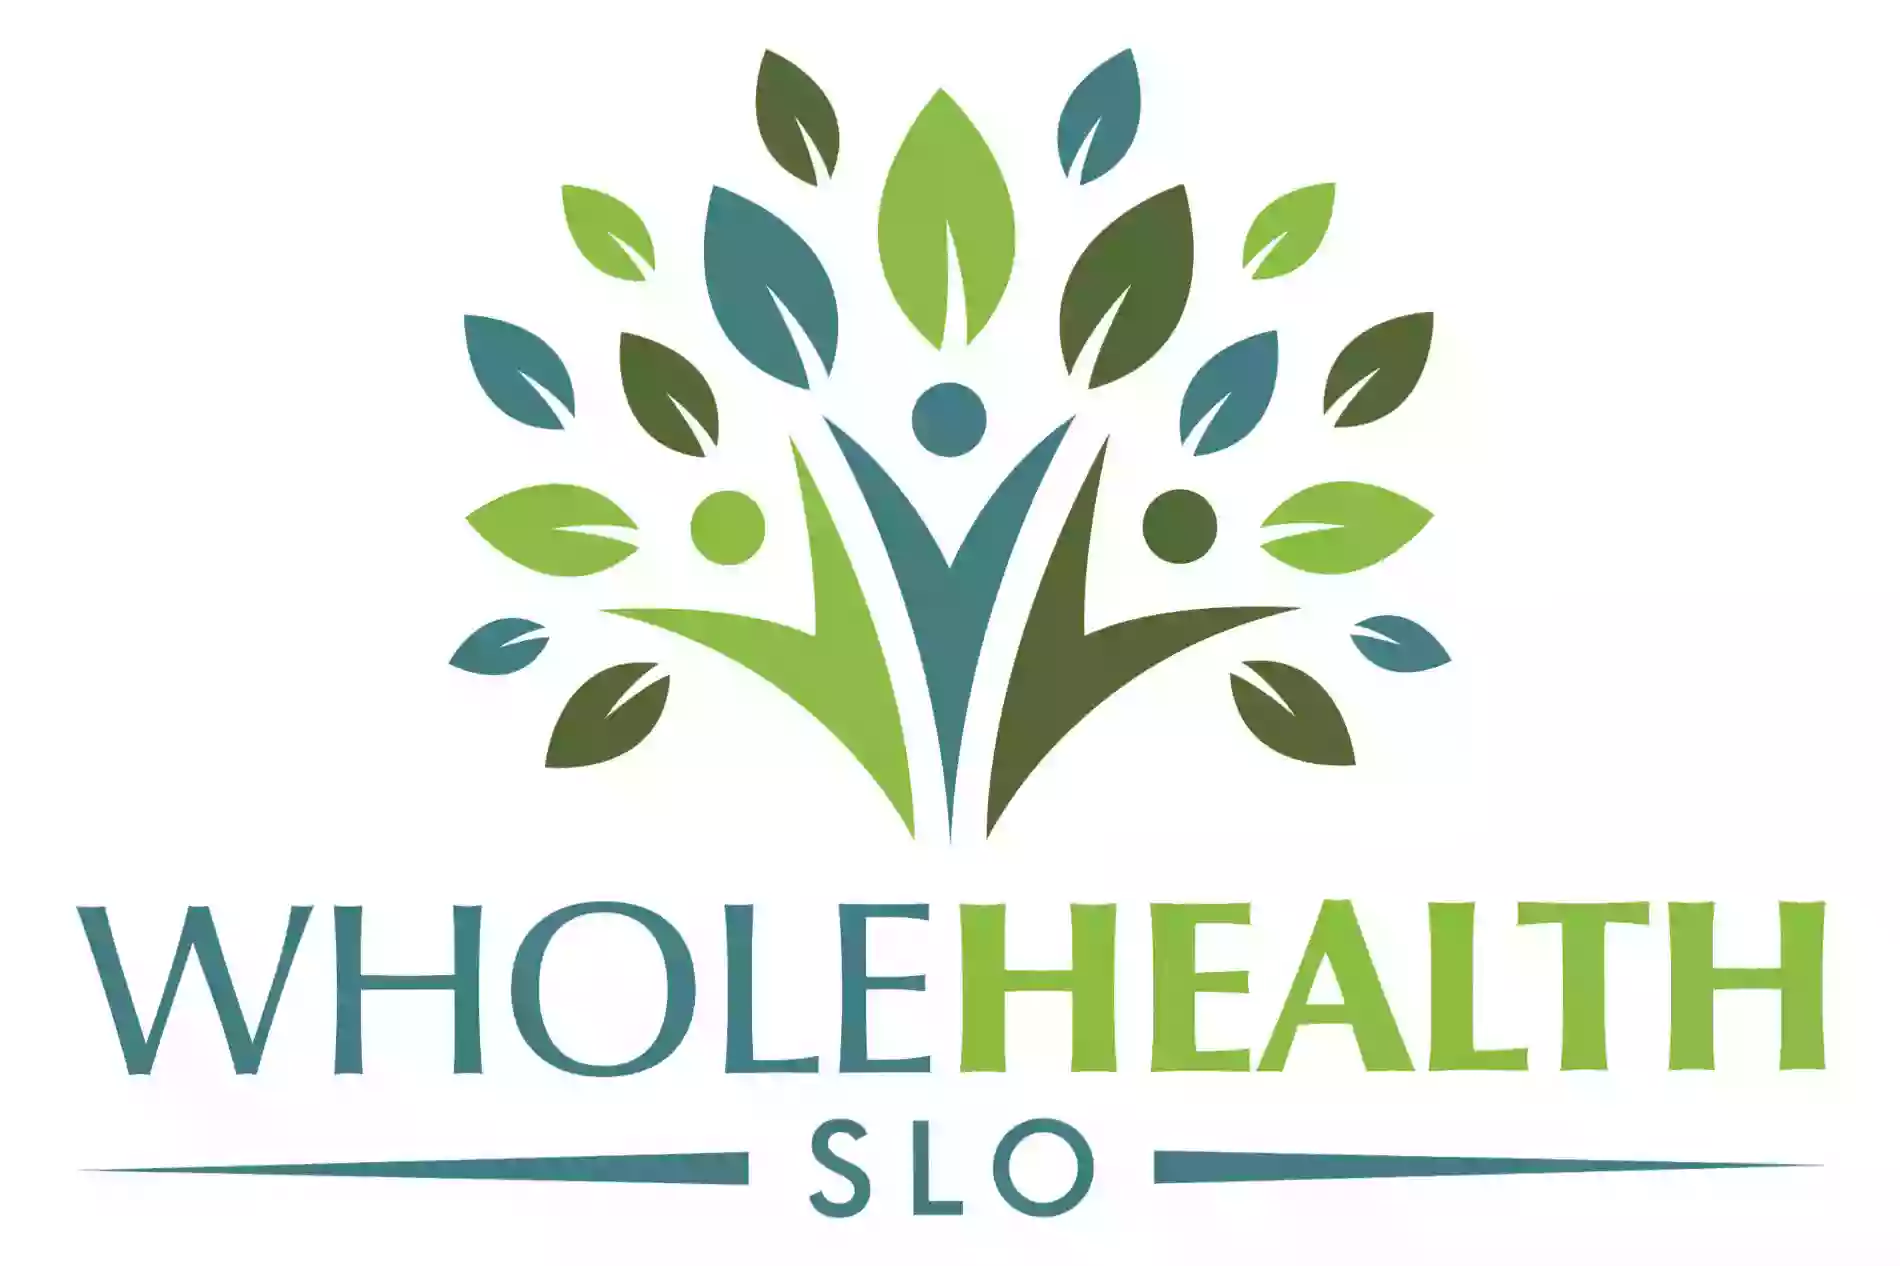 Whole Health SLO